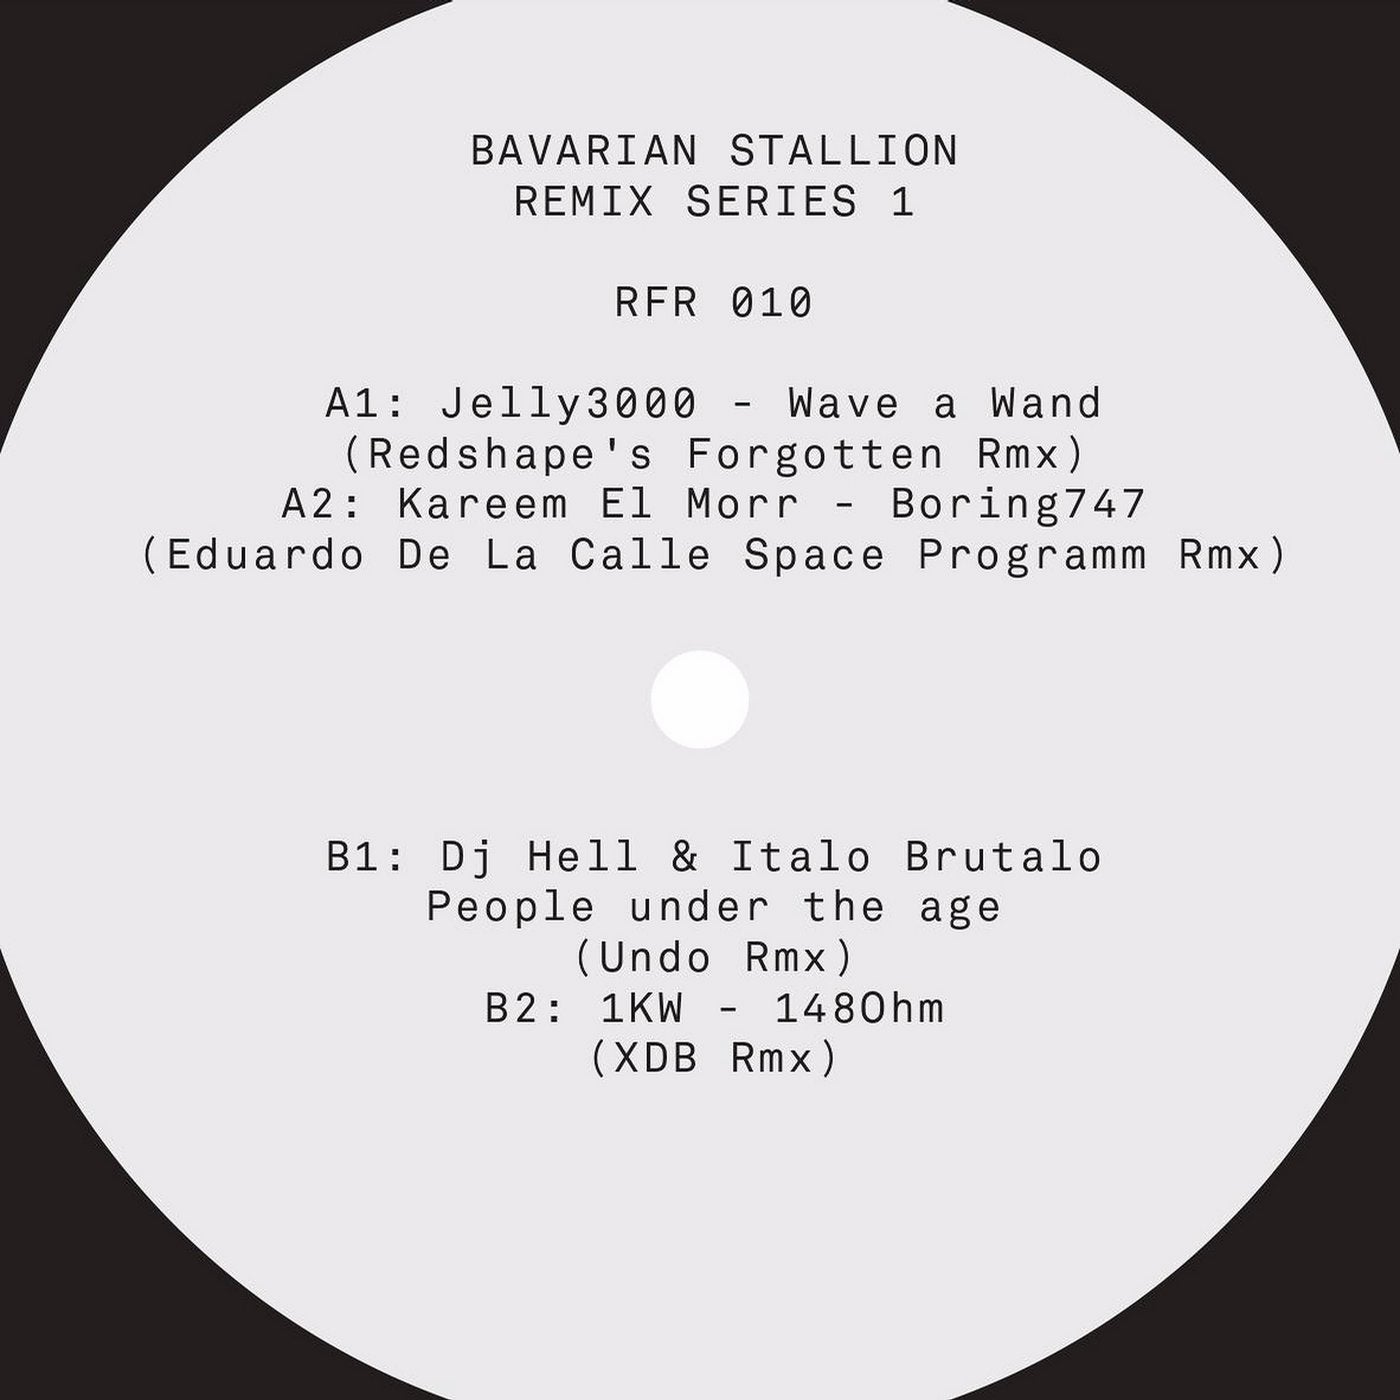 Bavarian Stallion Remix Series 1